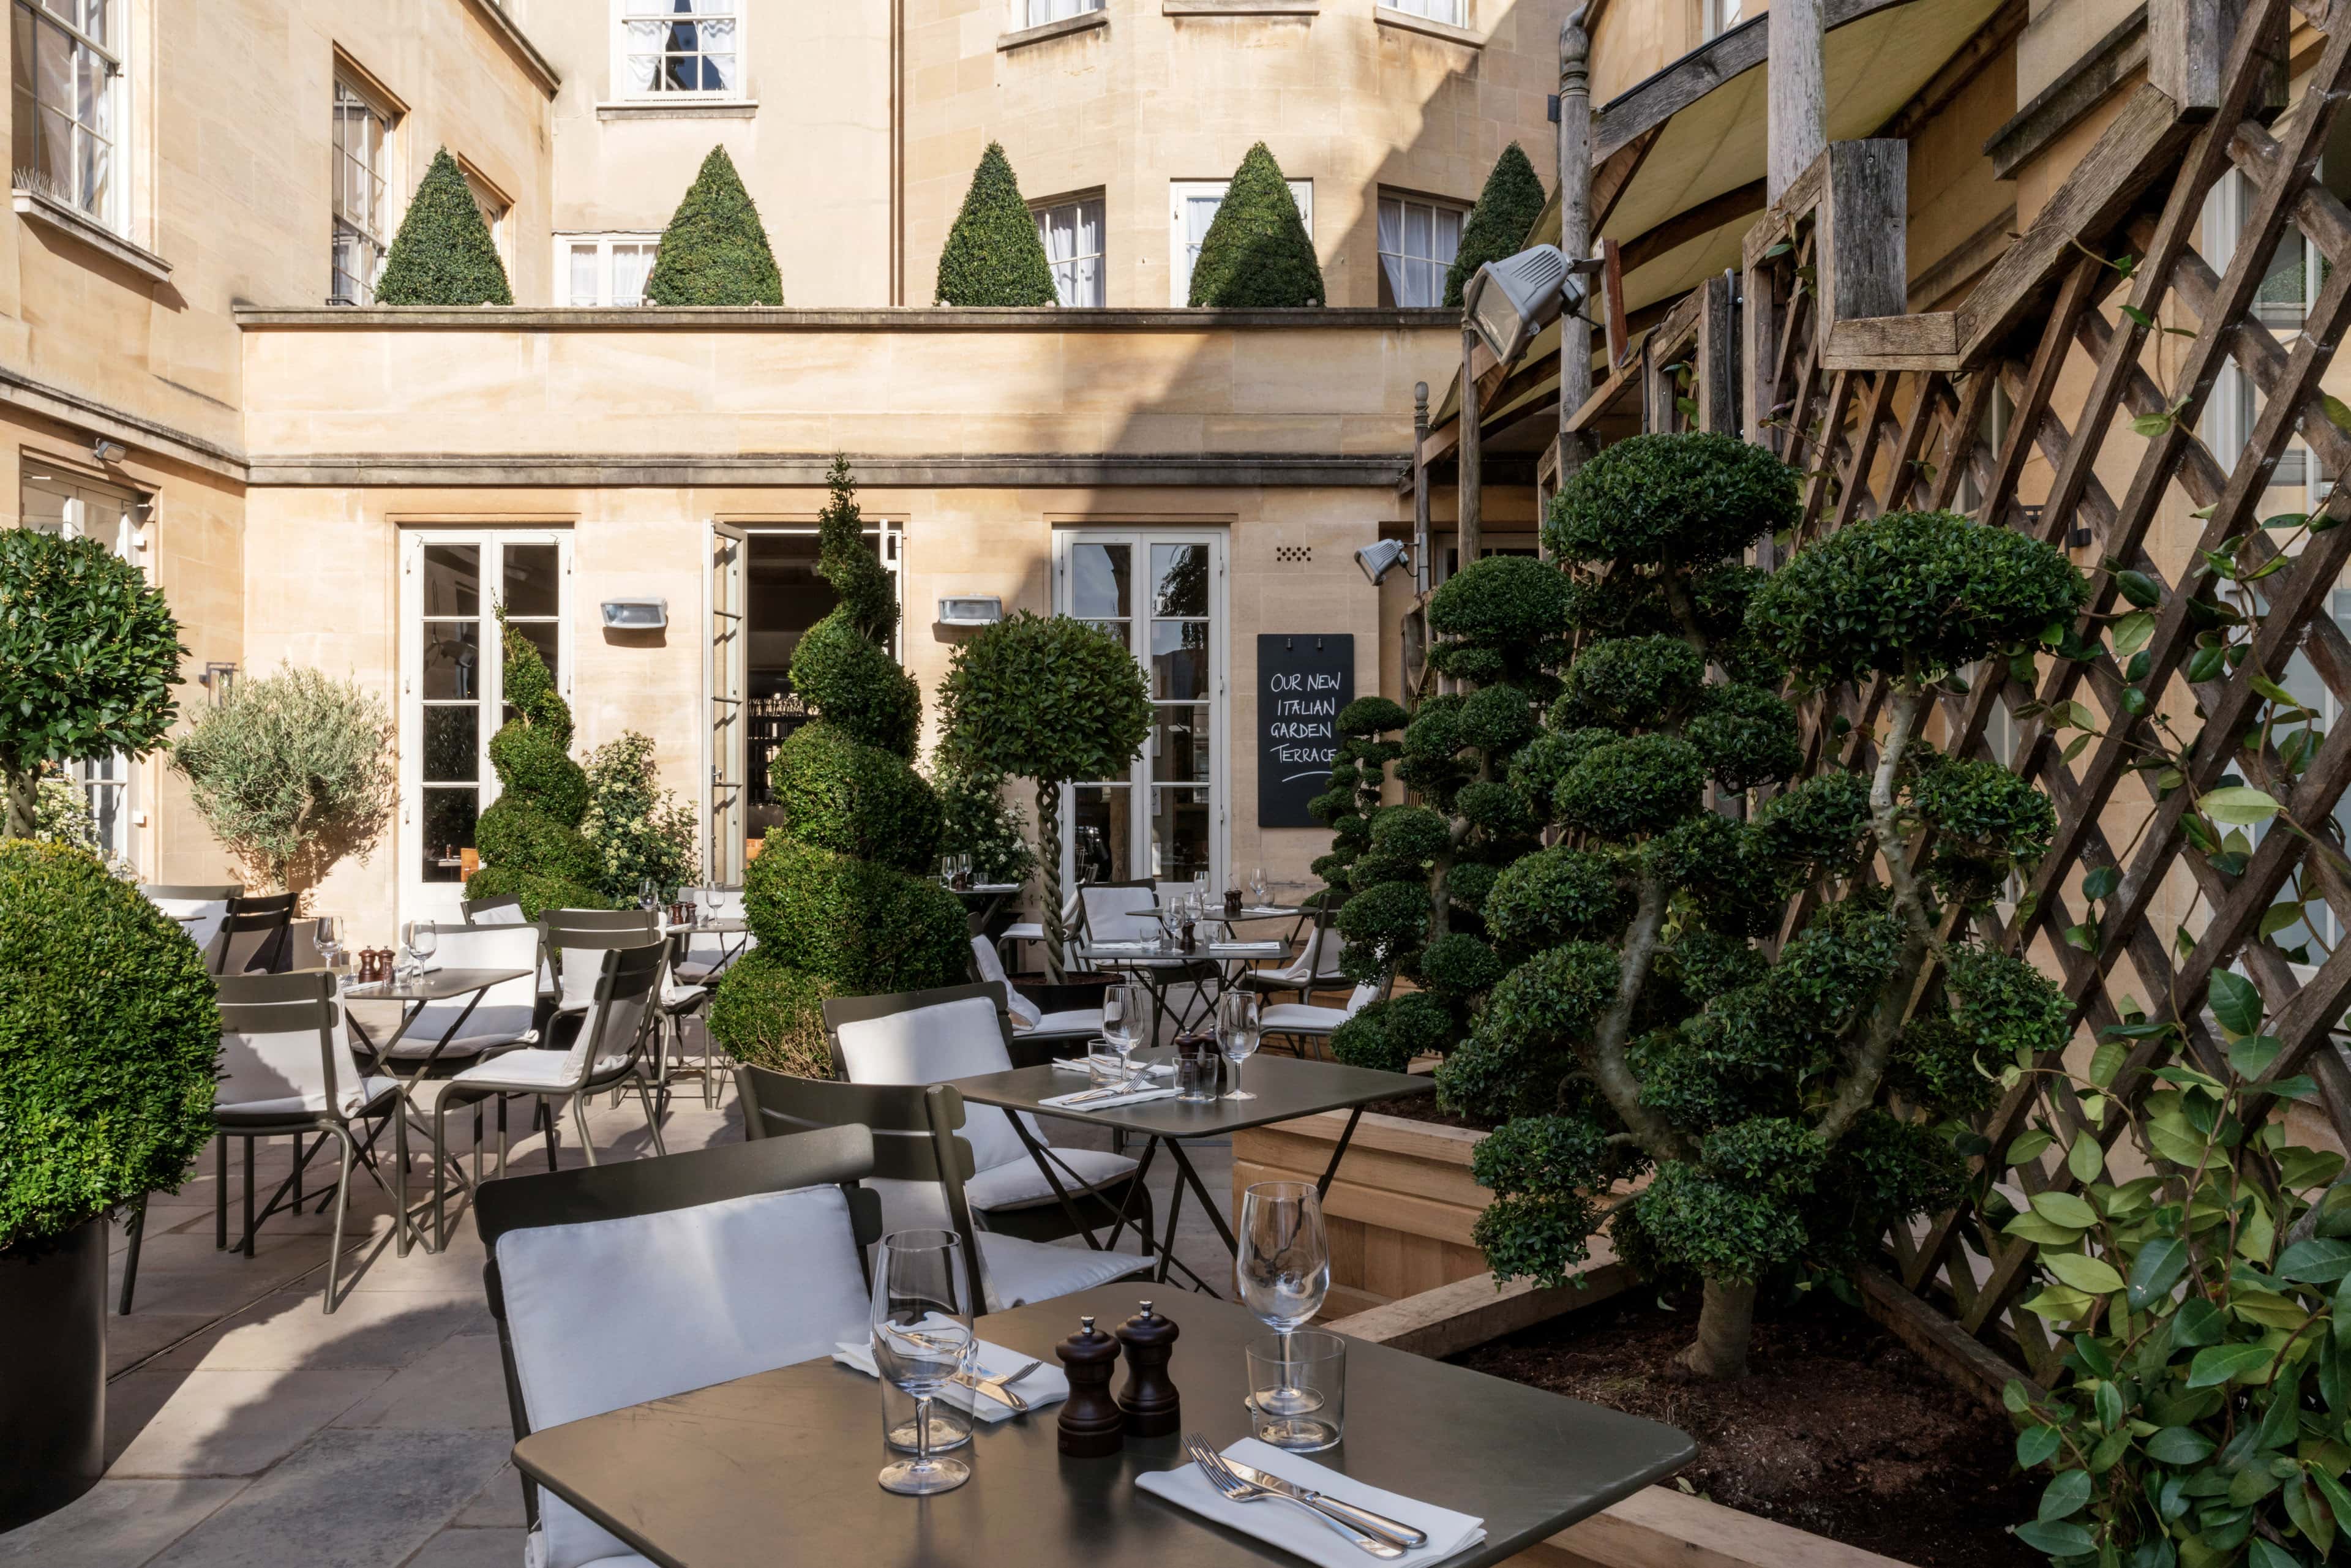 0009 - 2016 - Quod Restaurant & Bar - Oxford - High Res - Italian Terrace Dining - Web Hero